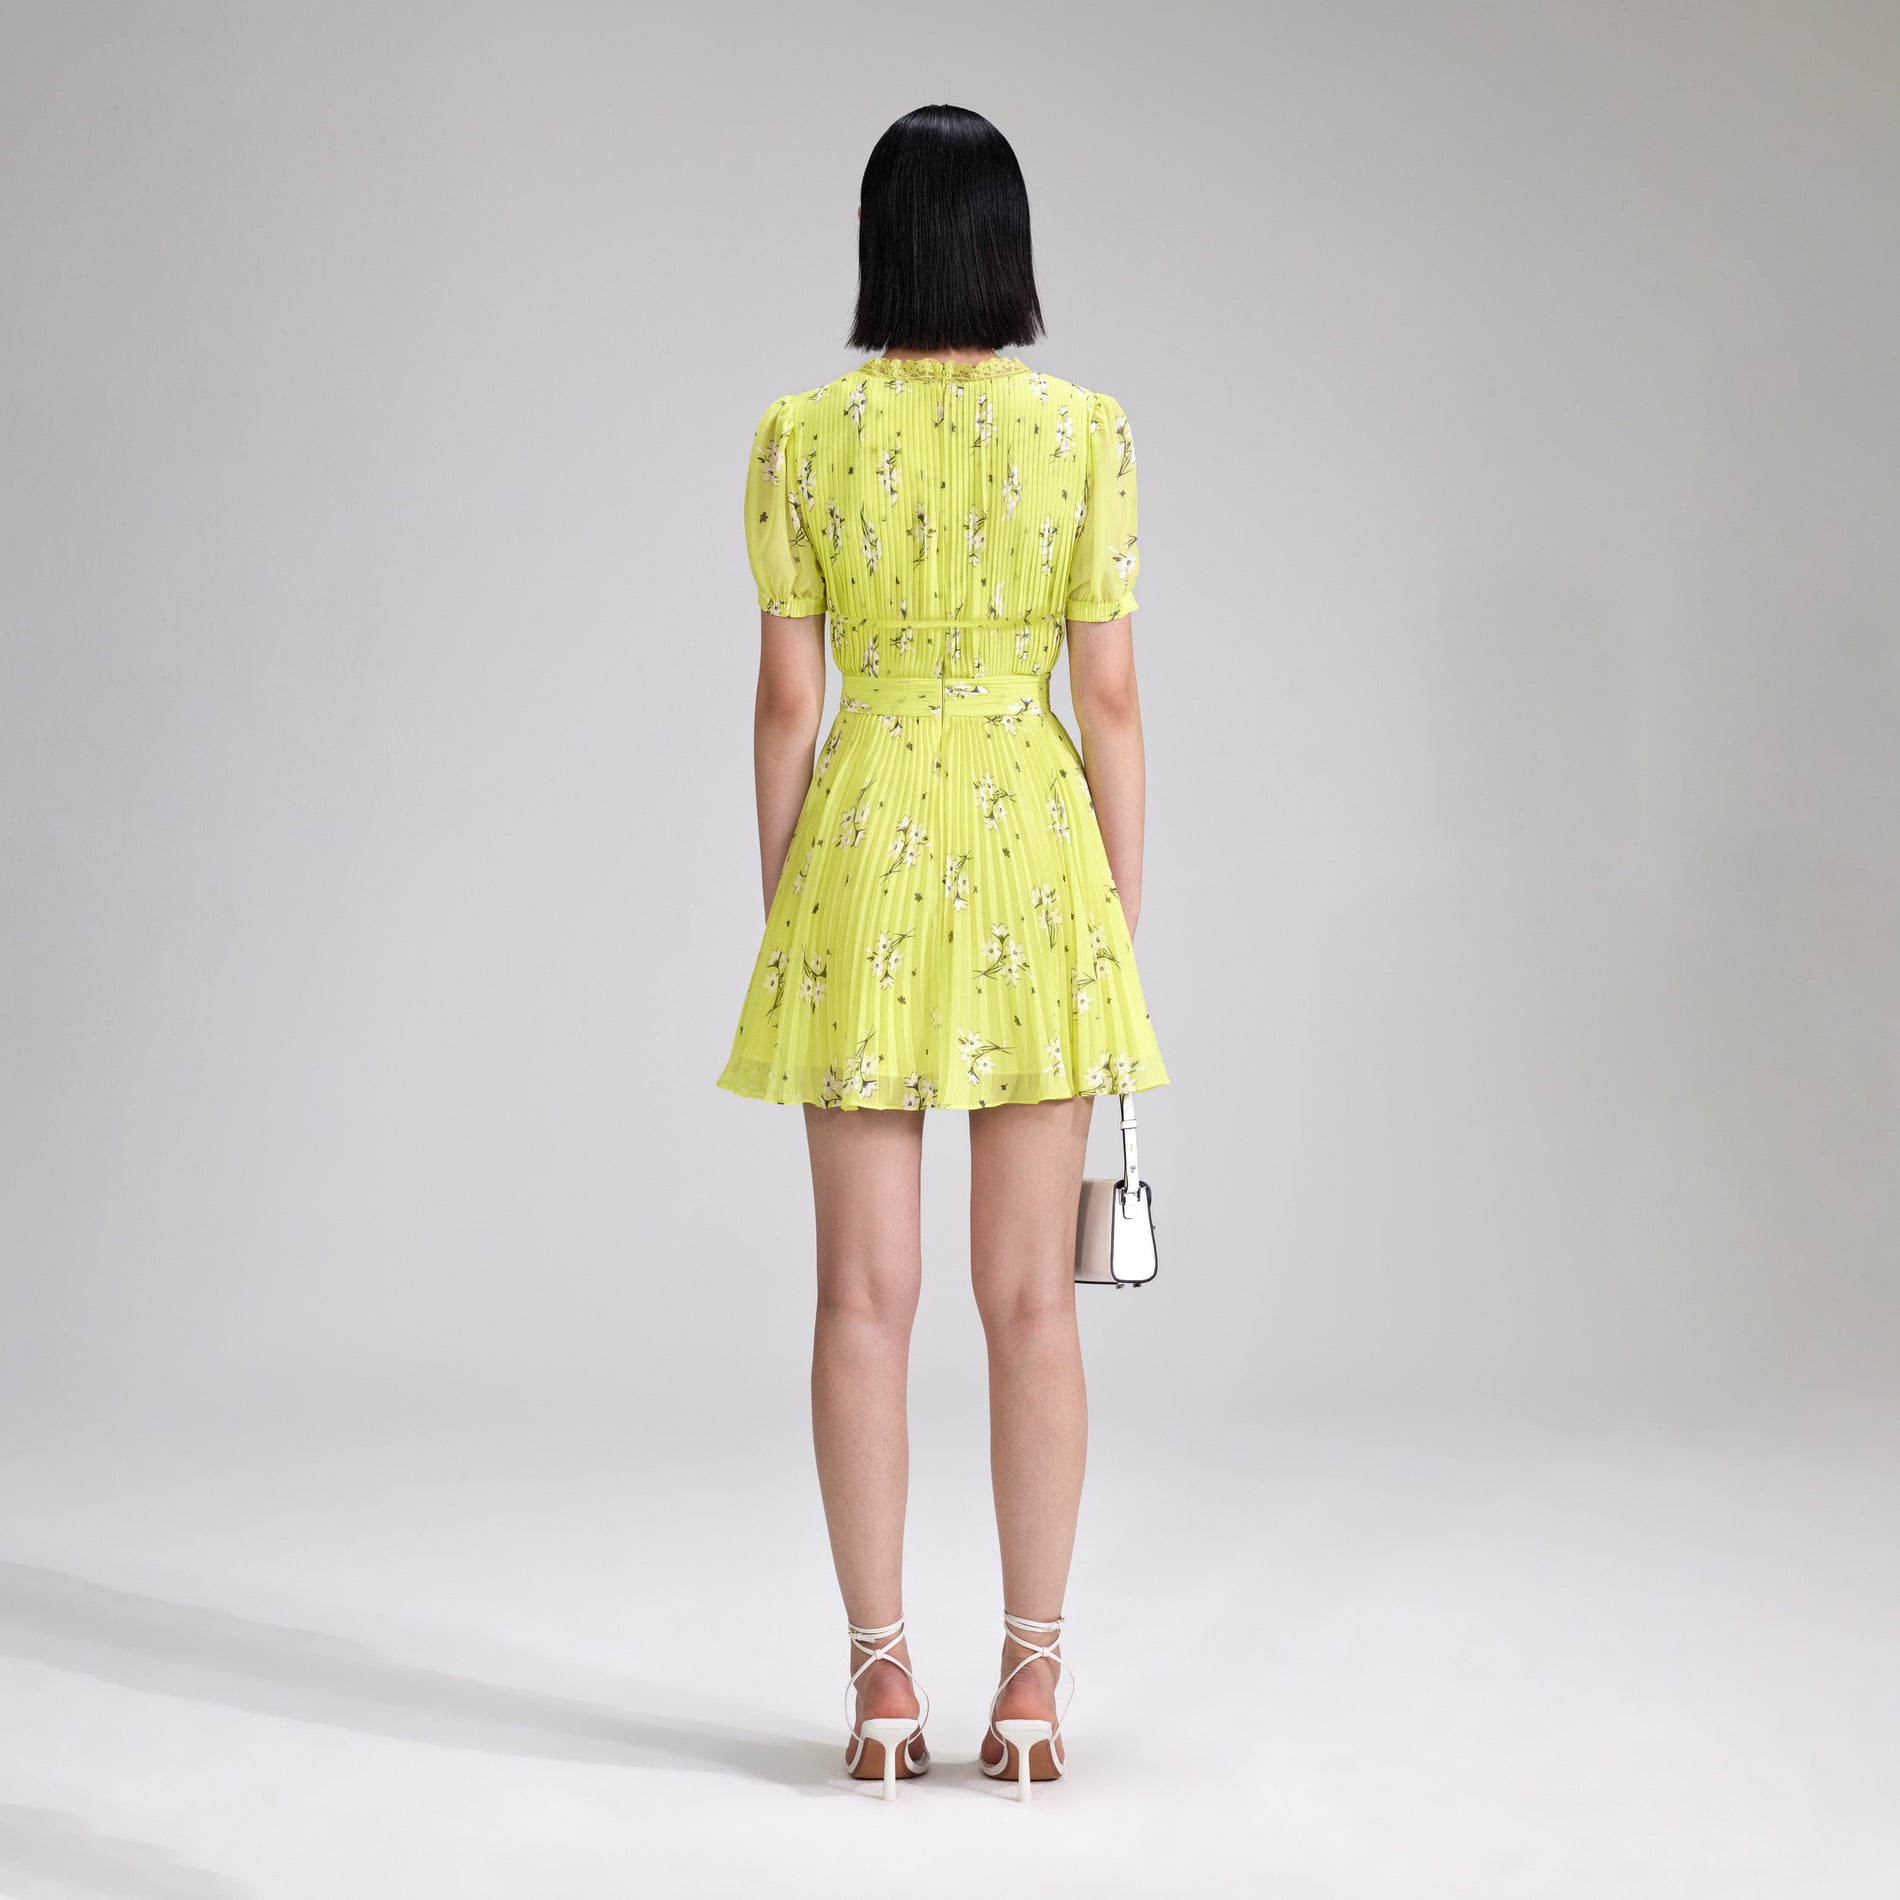 A woman wearing the Lime Floral Chiffon Mini Dress